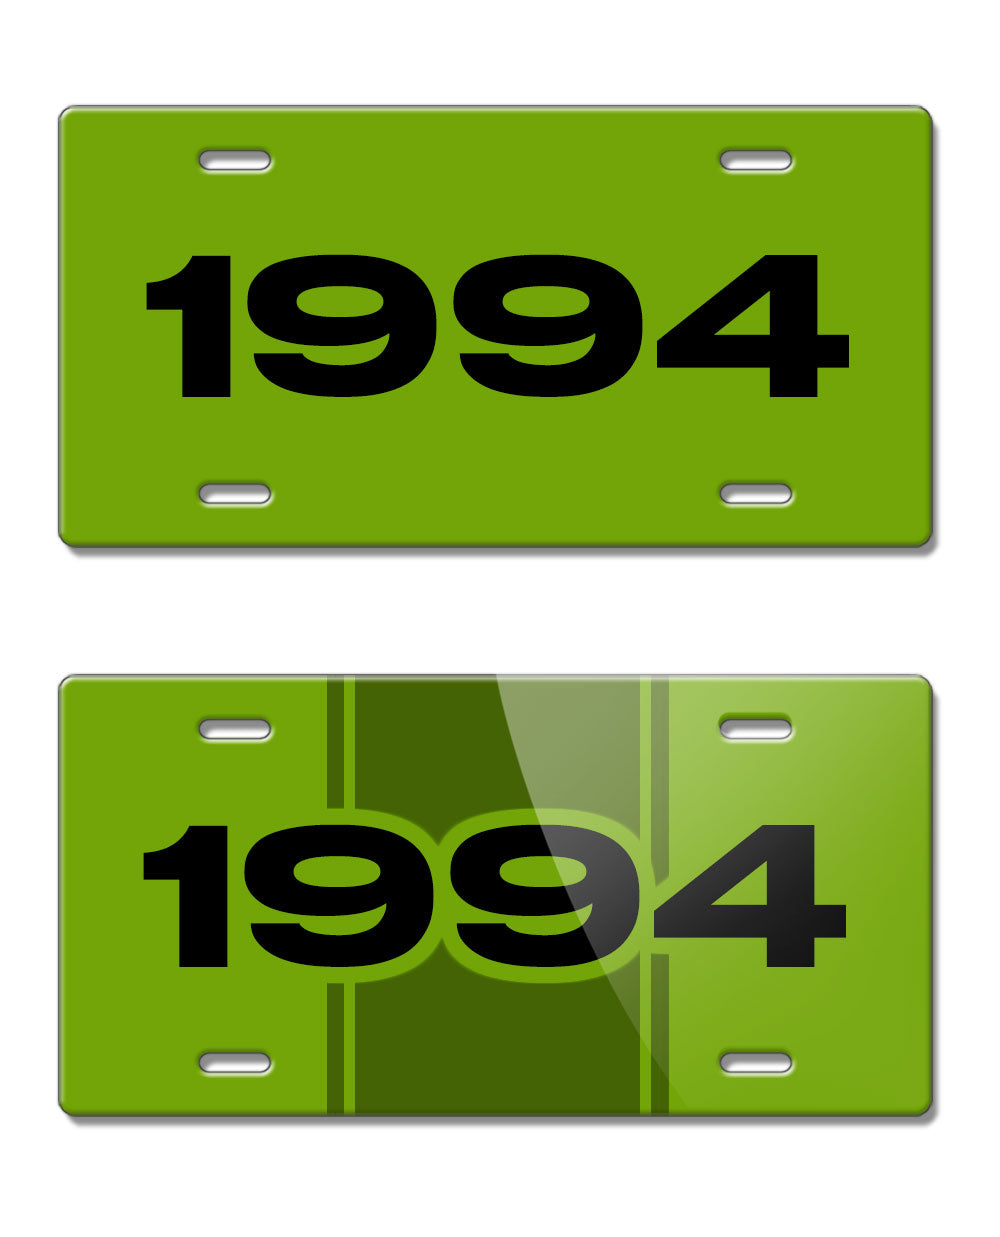 1994 Customizable - License Plate